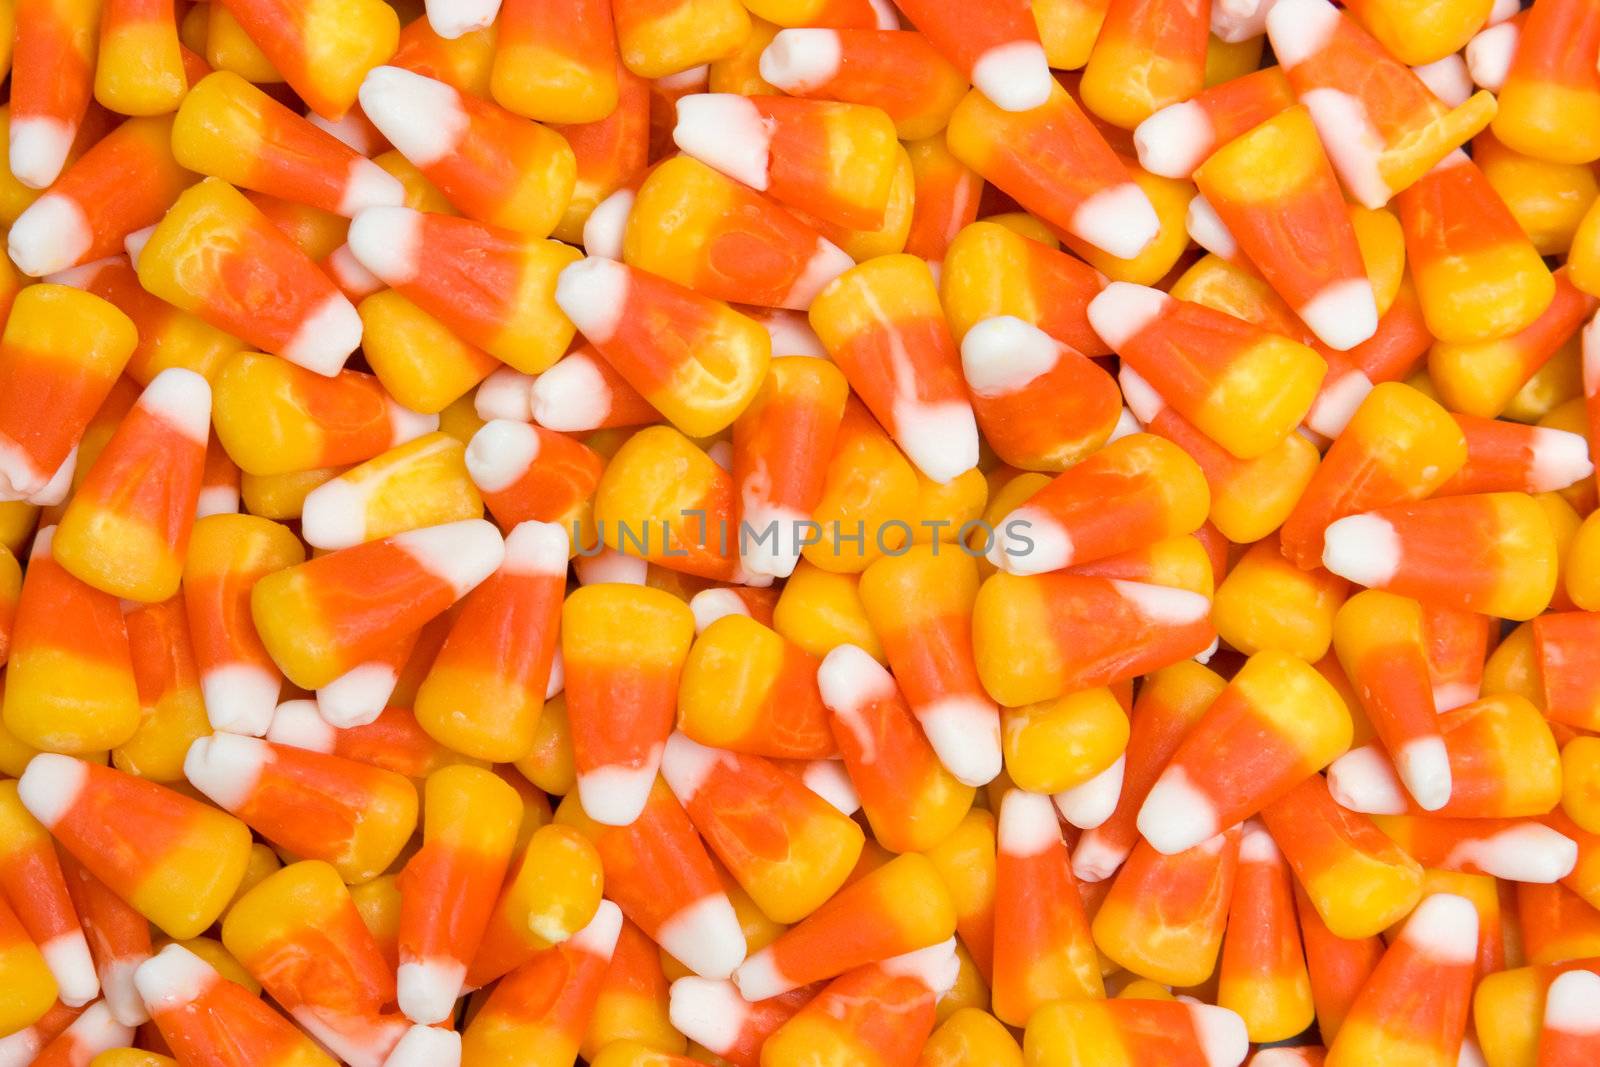 Orange and yellow candy corn